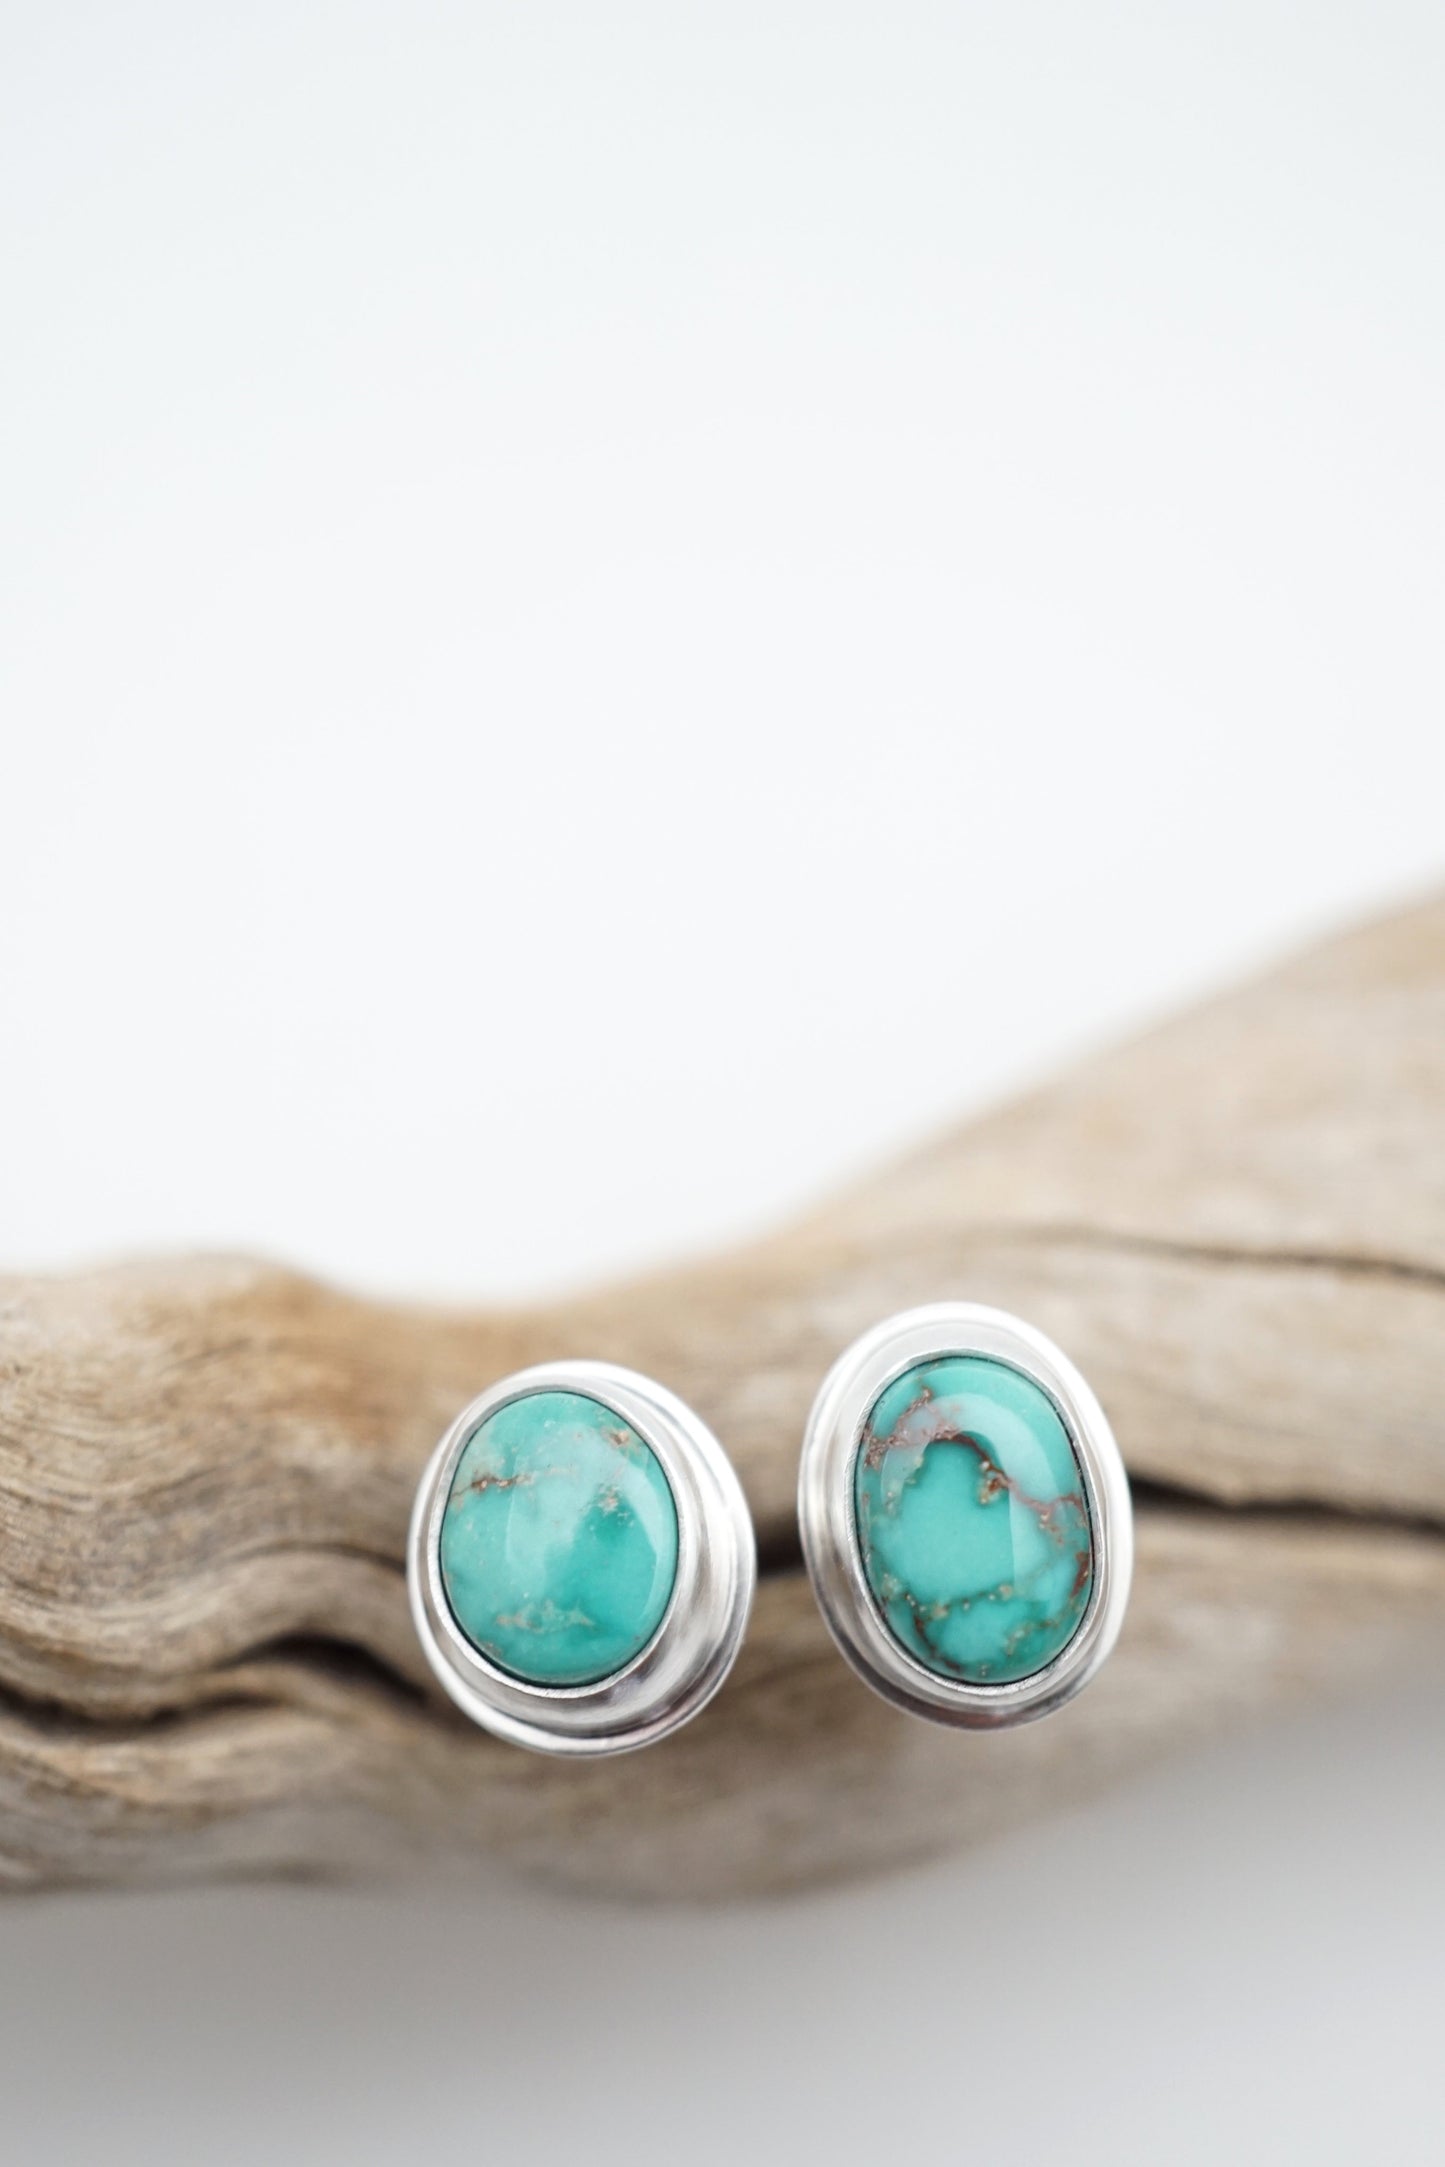 small carico lake turquoise stud earrings - Lumenrose